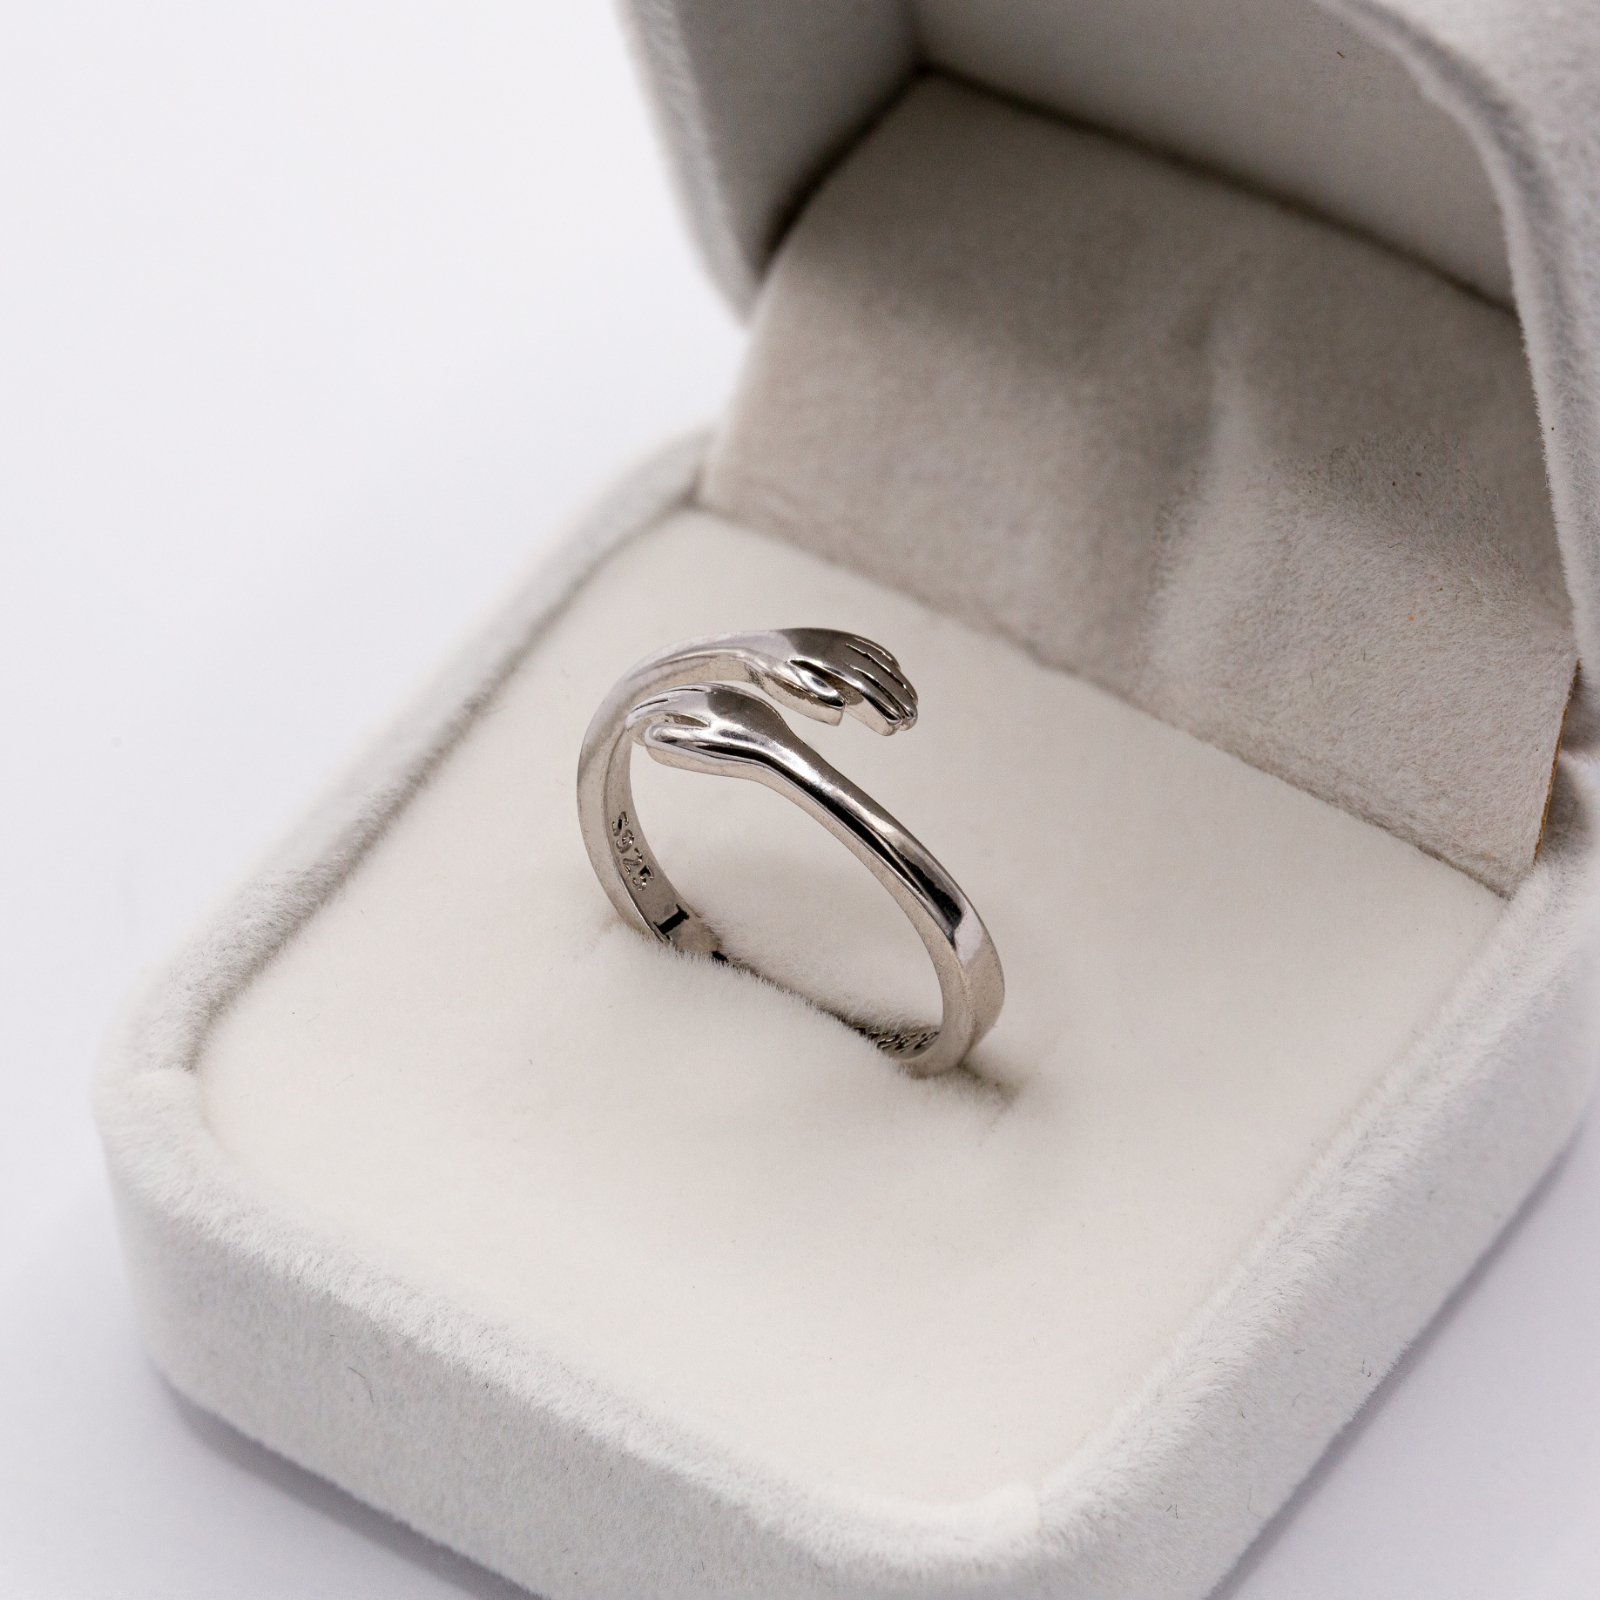 Brilliant Creative Love Hug Silver Ring Unisex Adjustable Open Ring Jewelry  - Walmart.com